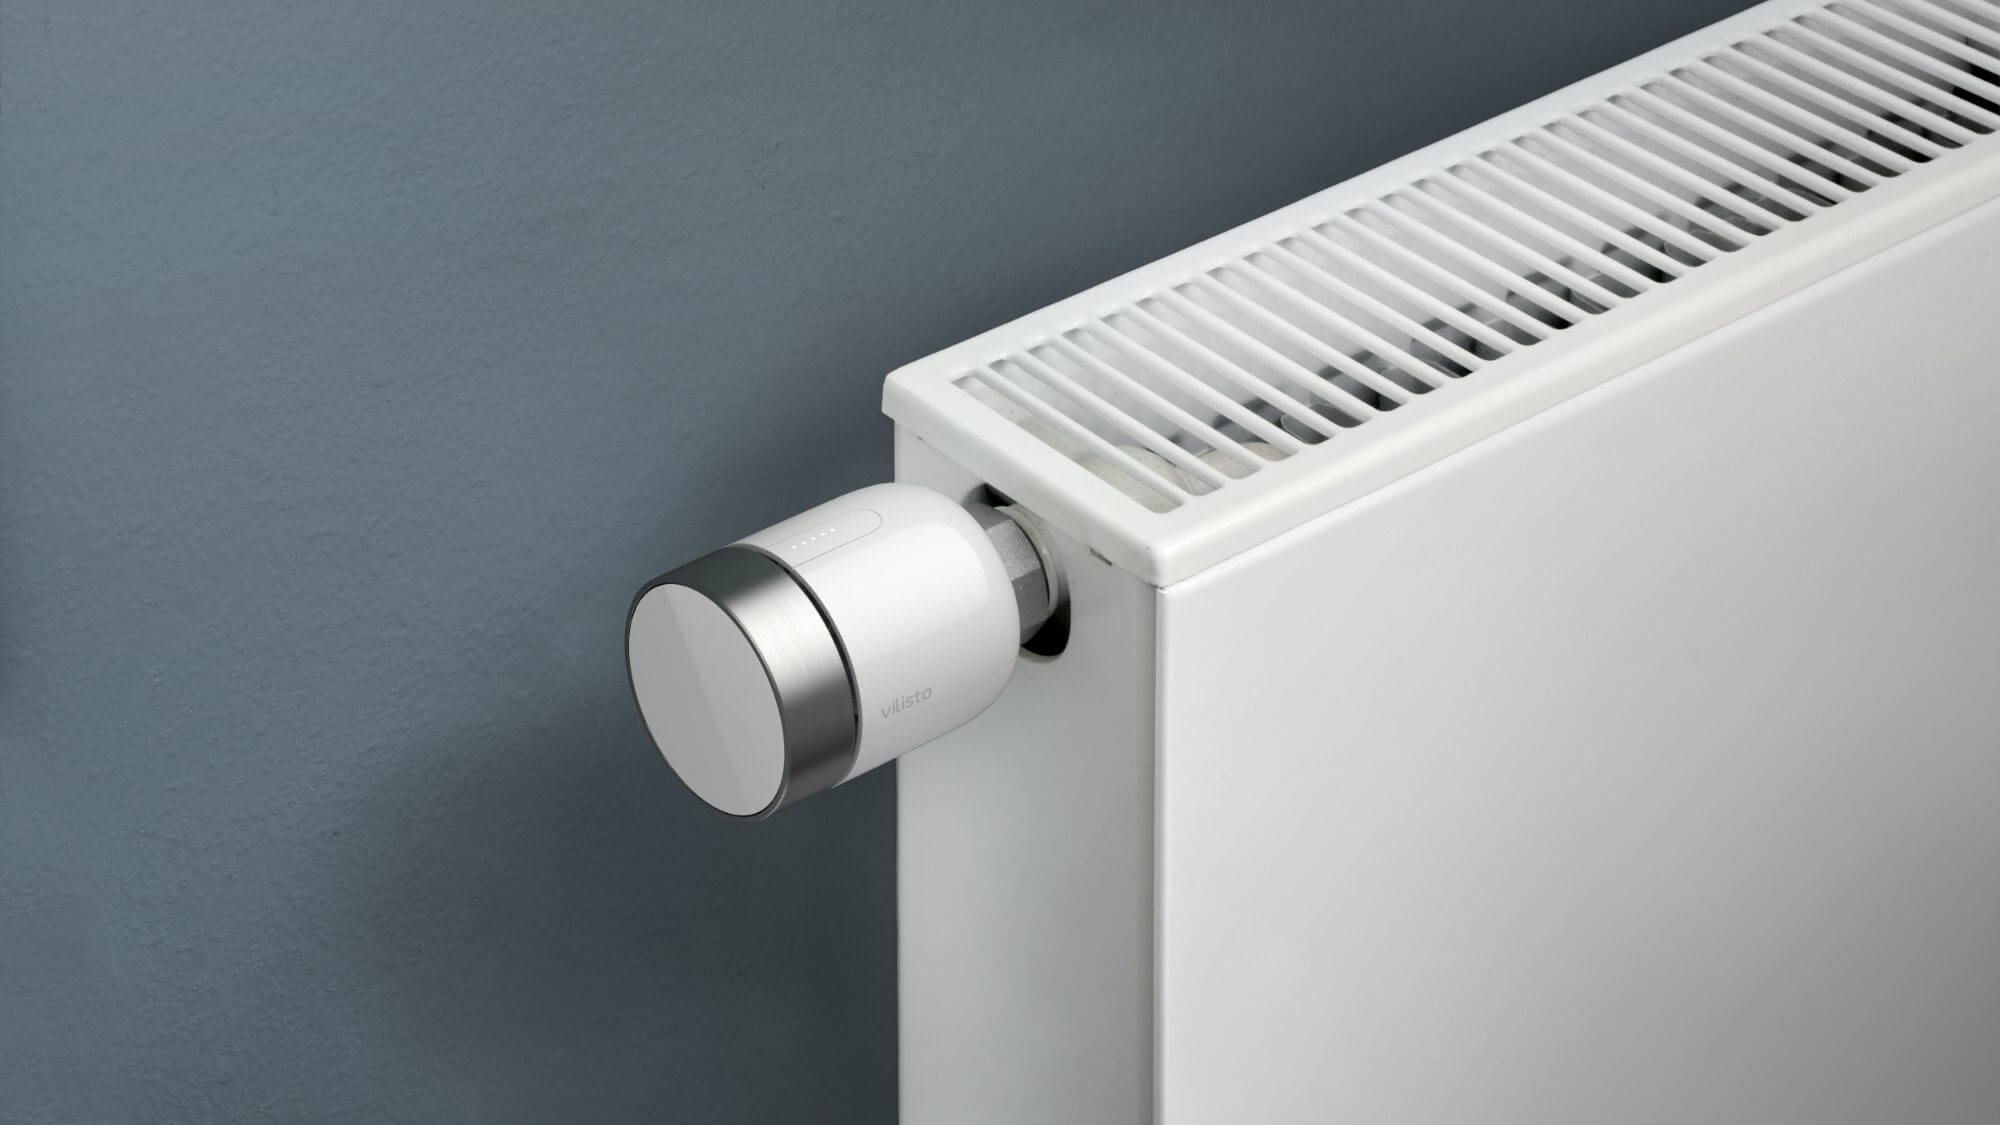 Vilisto Smart Home Thermostat Start-up Rendering Innovation iOT